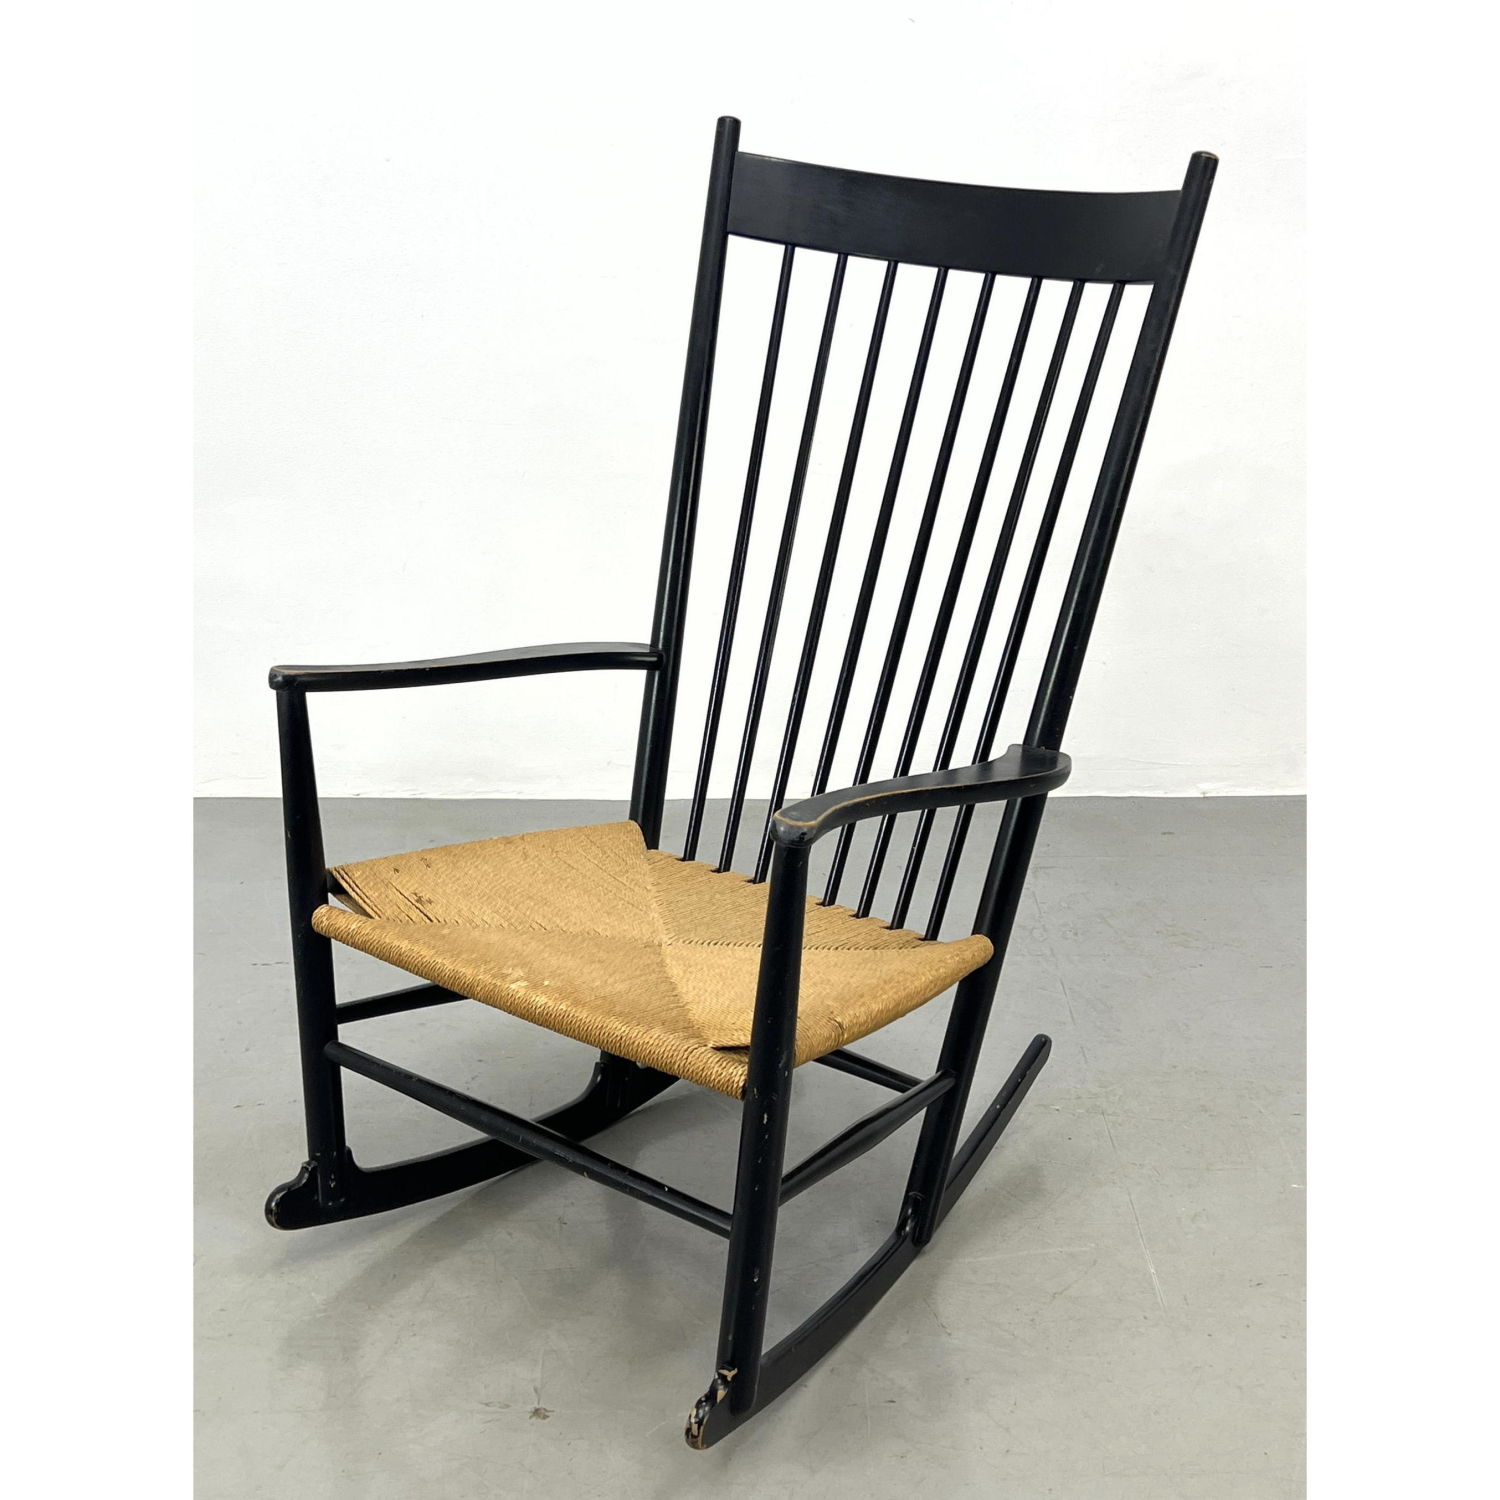 Hans Wegner rocking chair 

Dimensions: